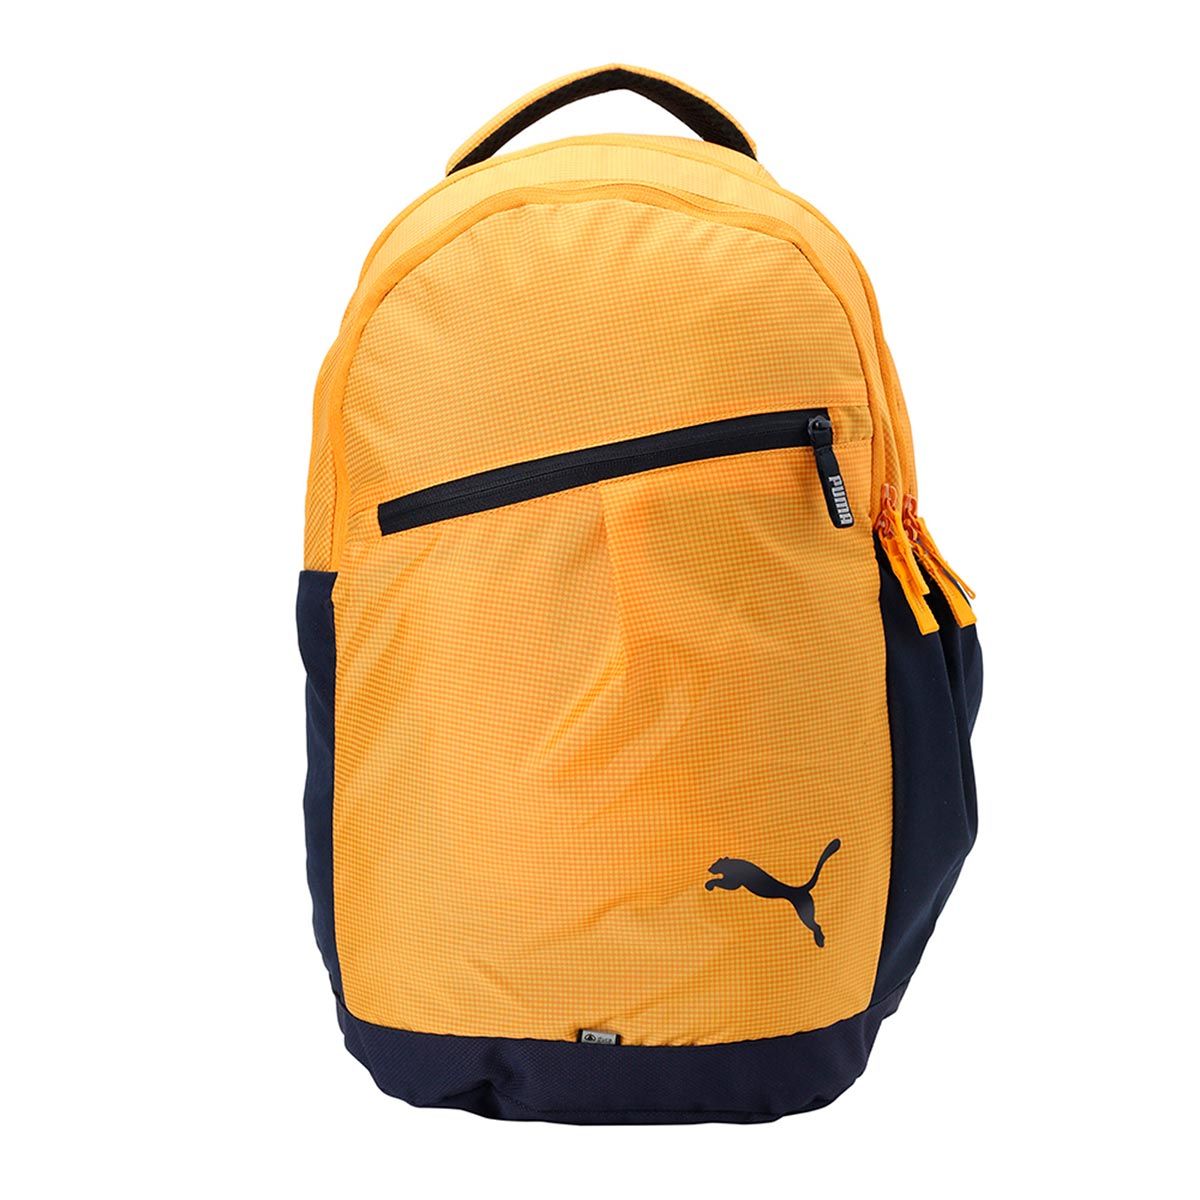 Puma Blue Backpack School Bag